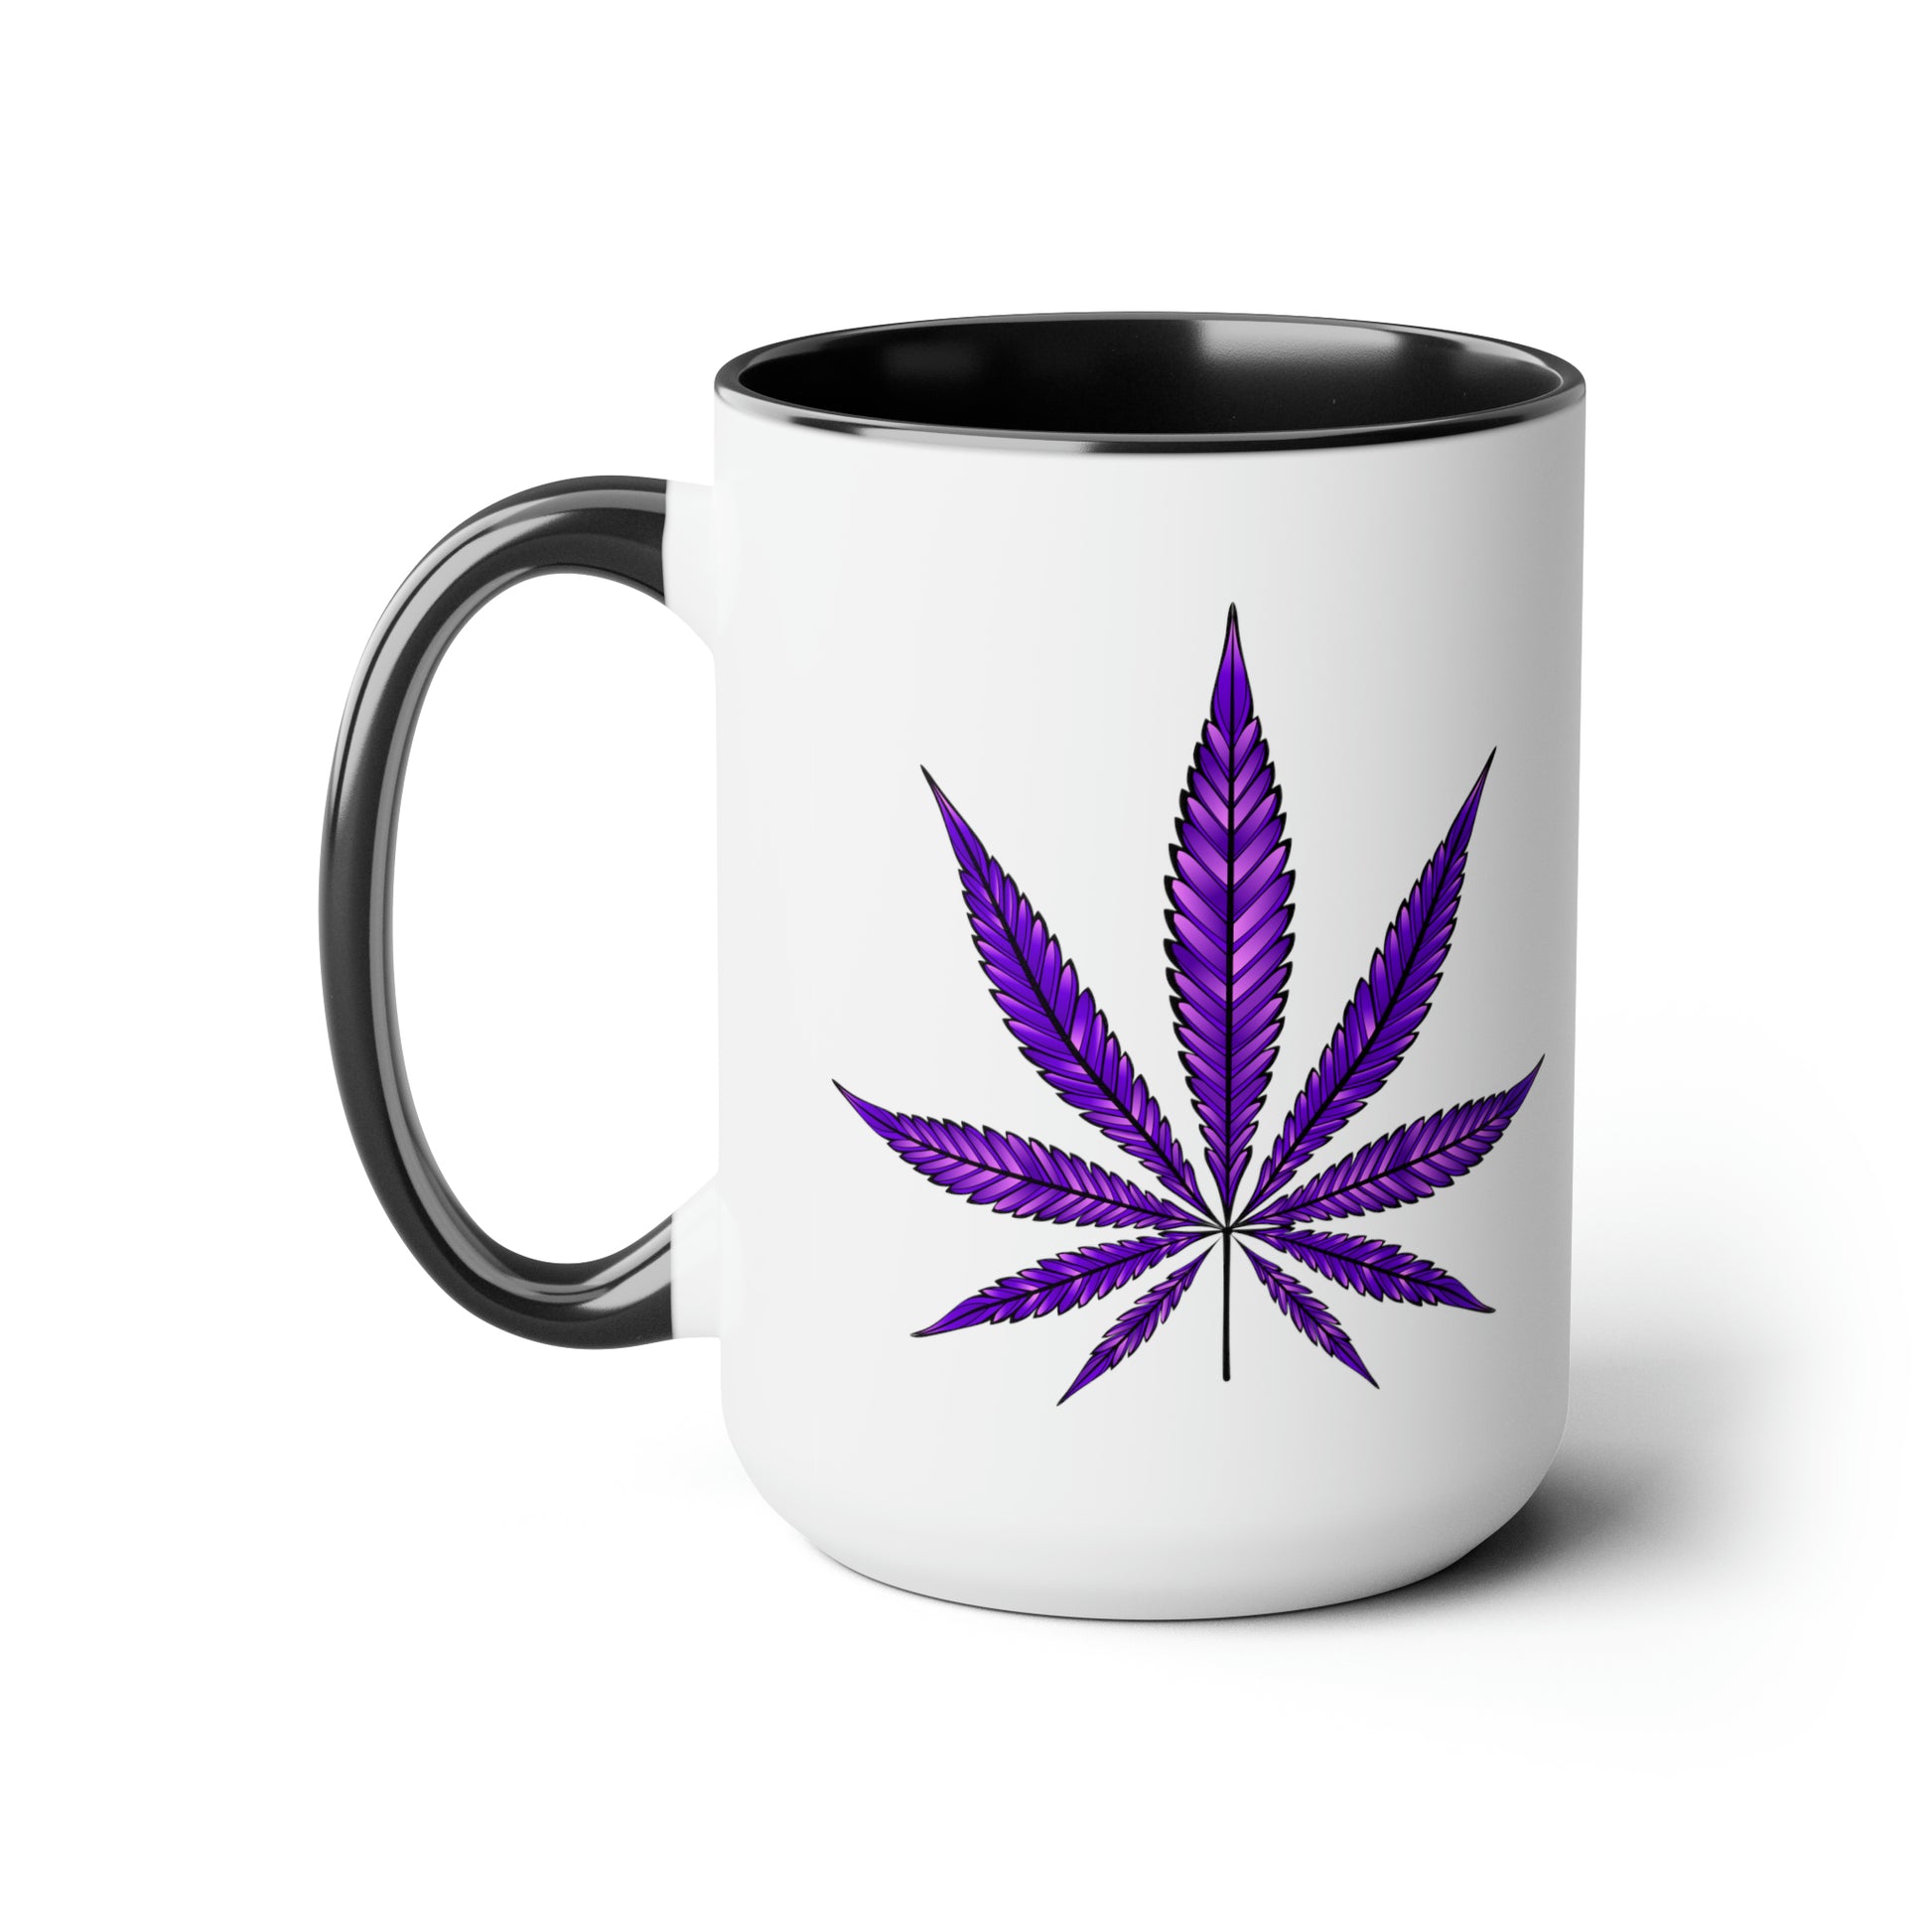 Sentence with product name: Purple Haze Marijuana Coffee Mug with black interior and handle, featuring a Purple Haze Marijuana leaf design on the side, isolated on a white background.